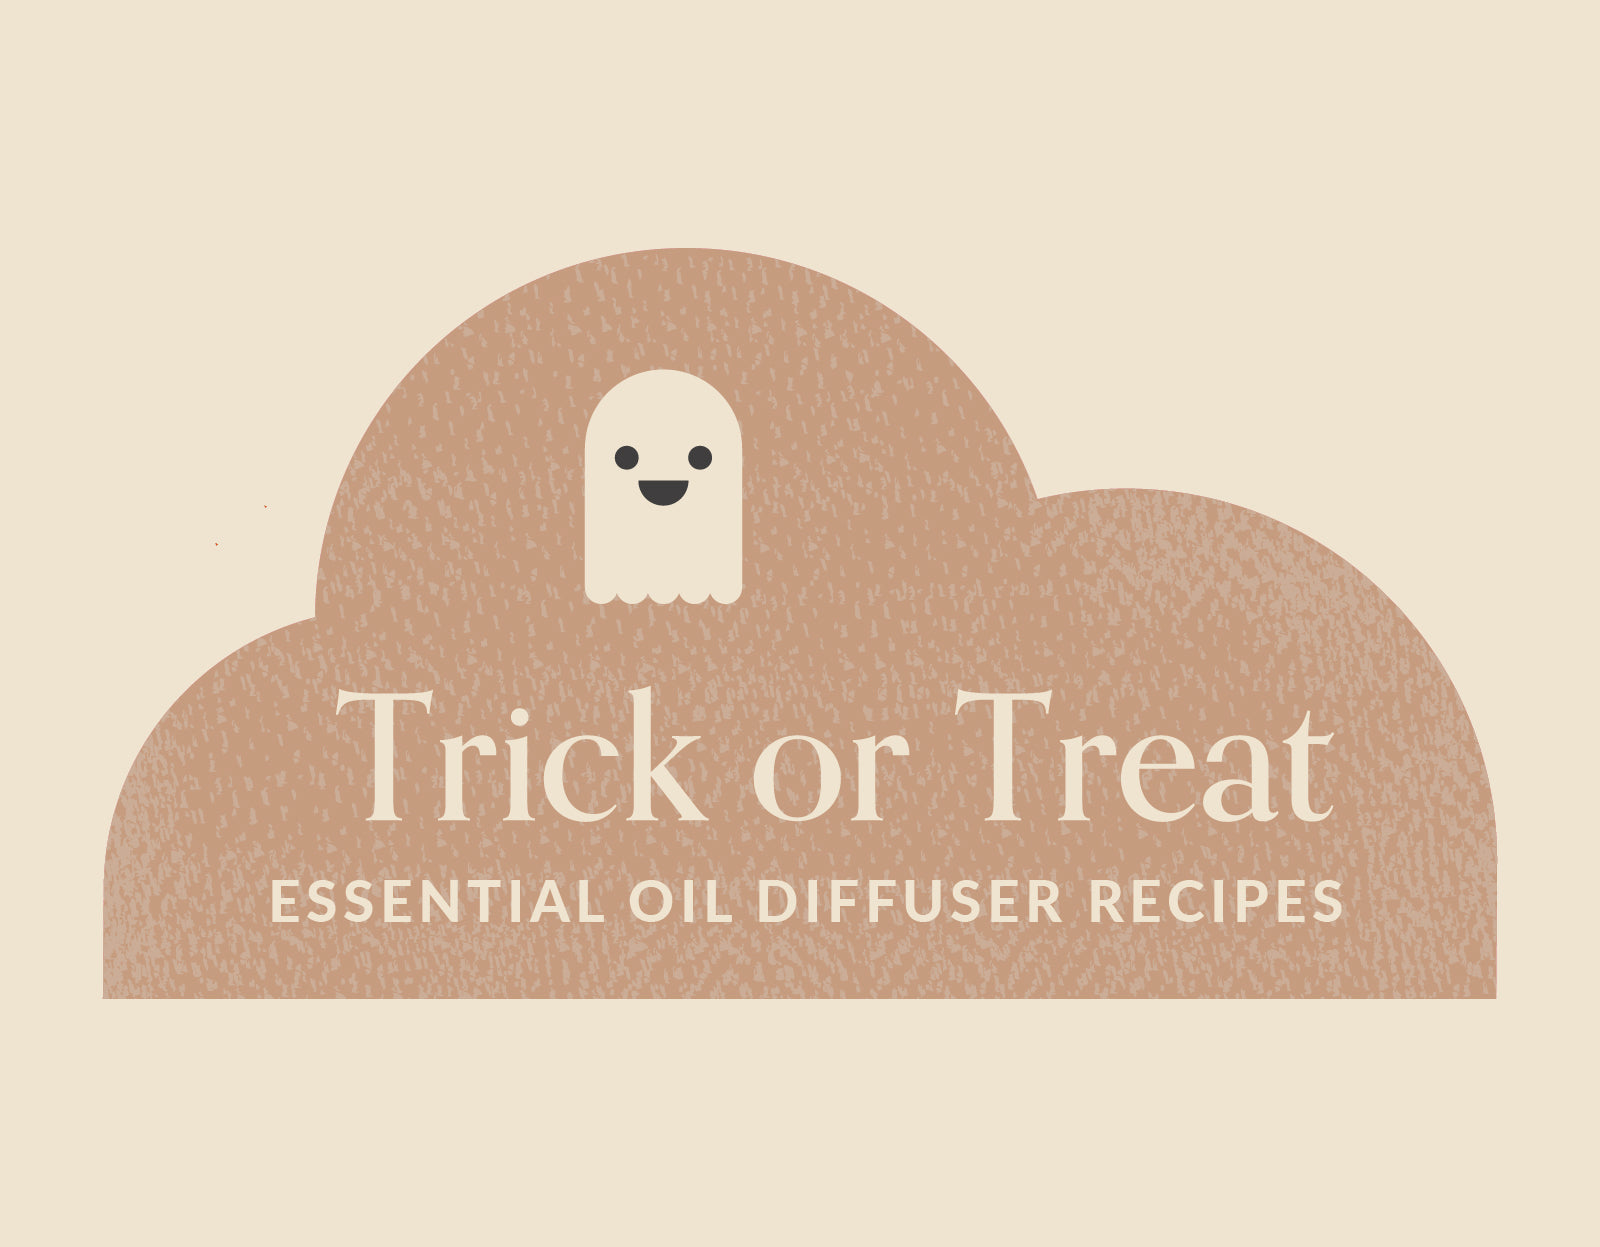 Frankincense Diffuser Blends - 10 Wellness Essential Oil Recipes